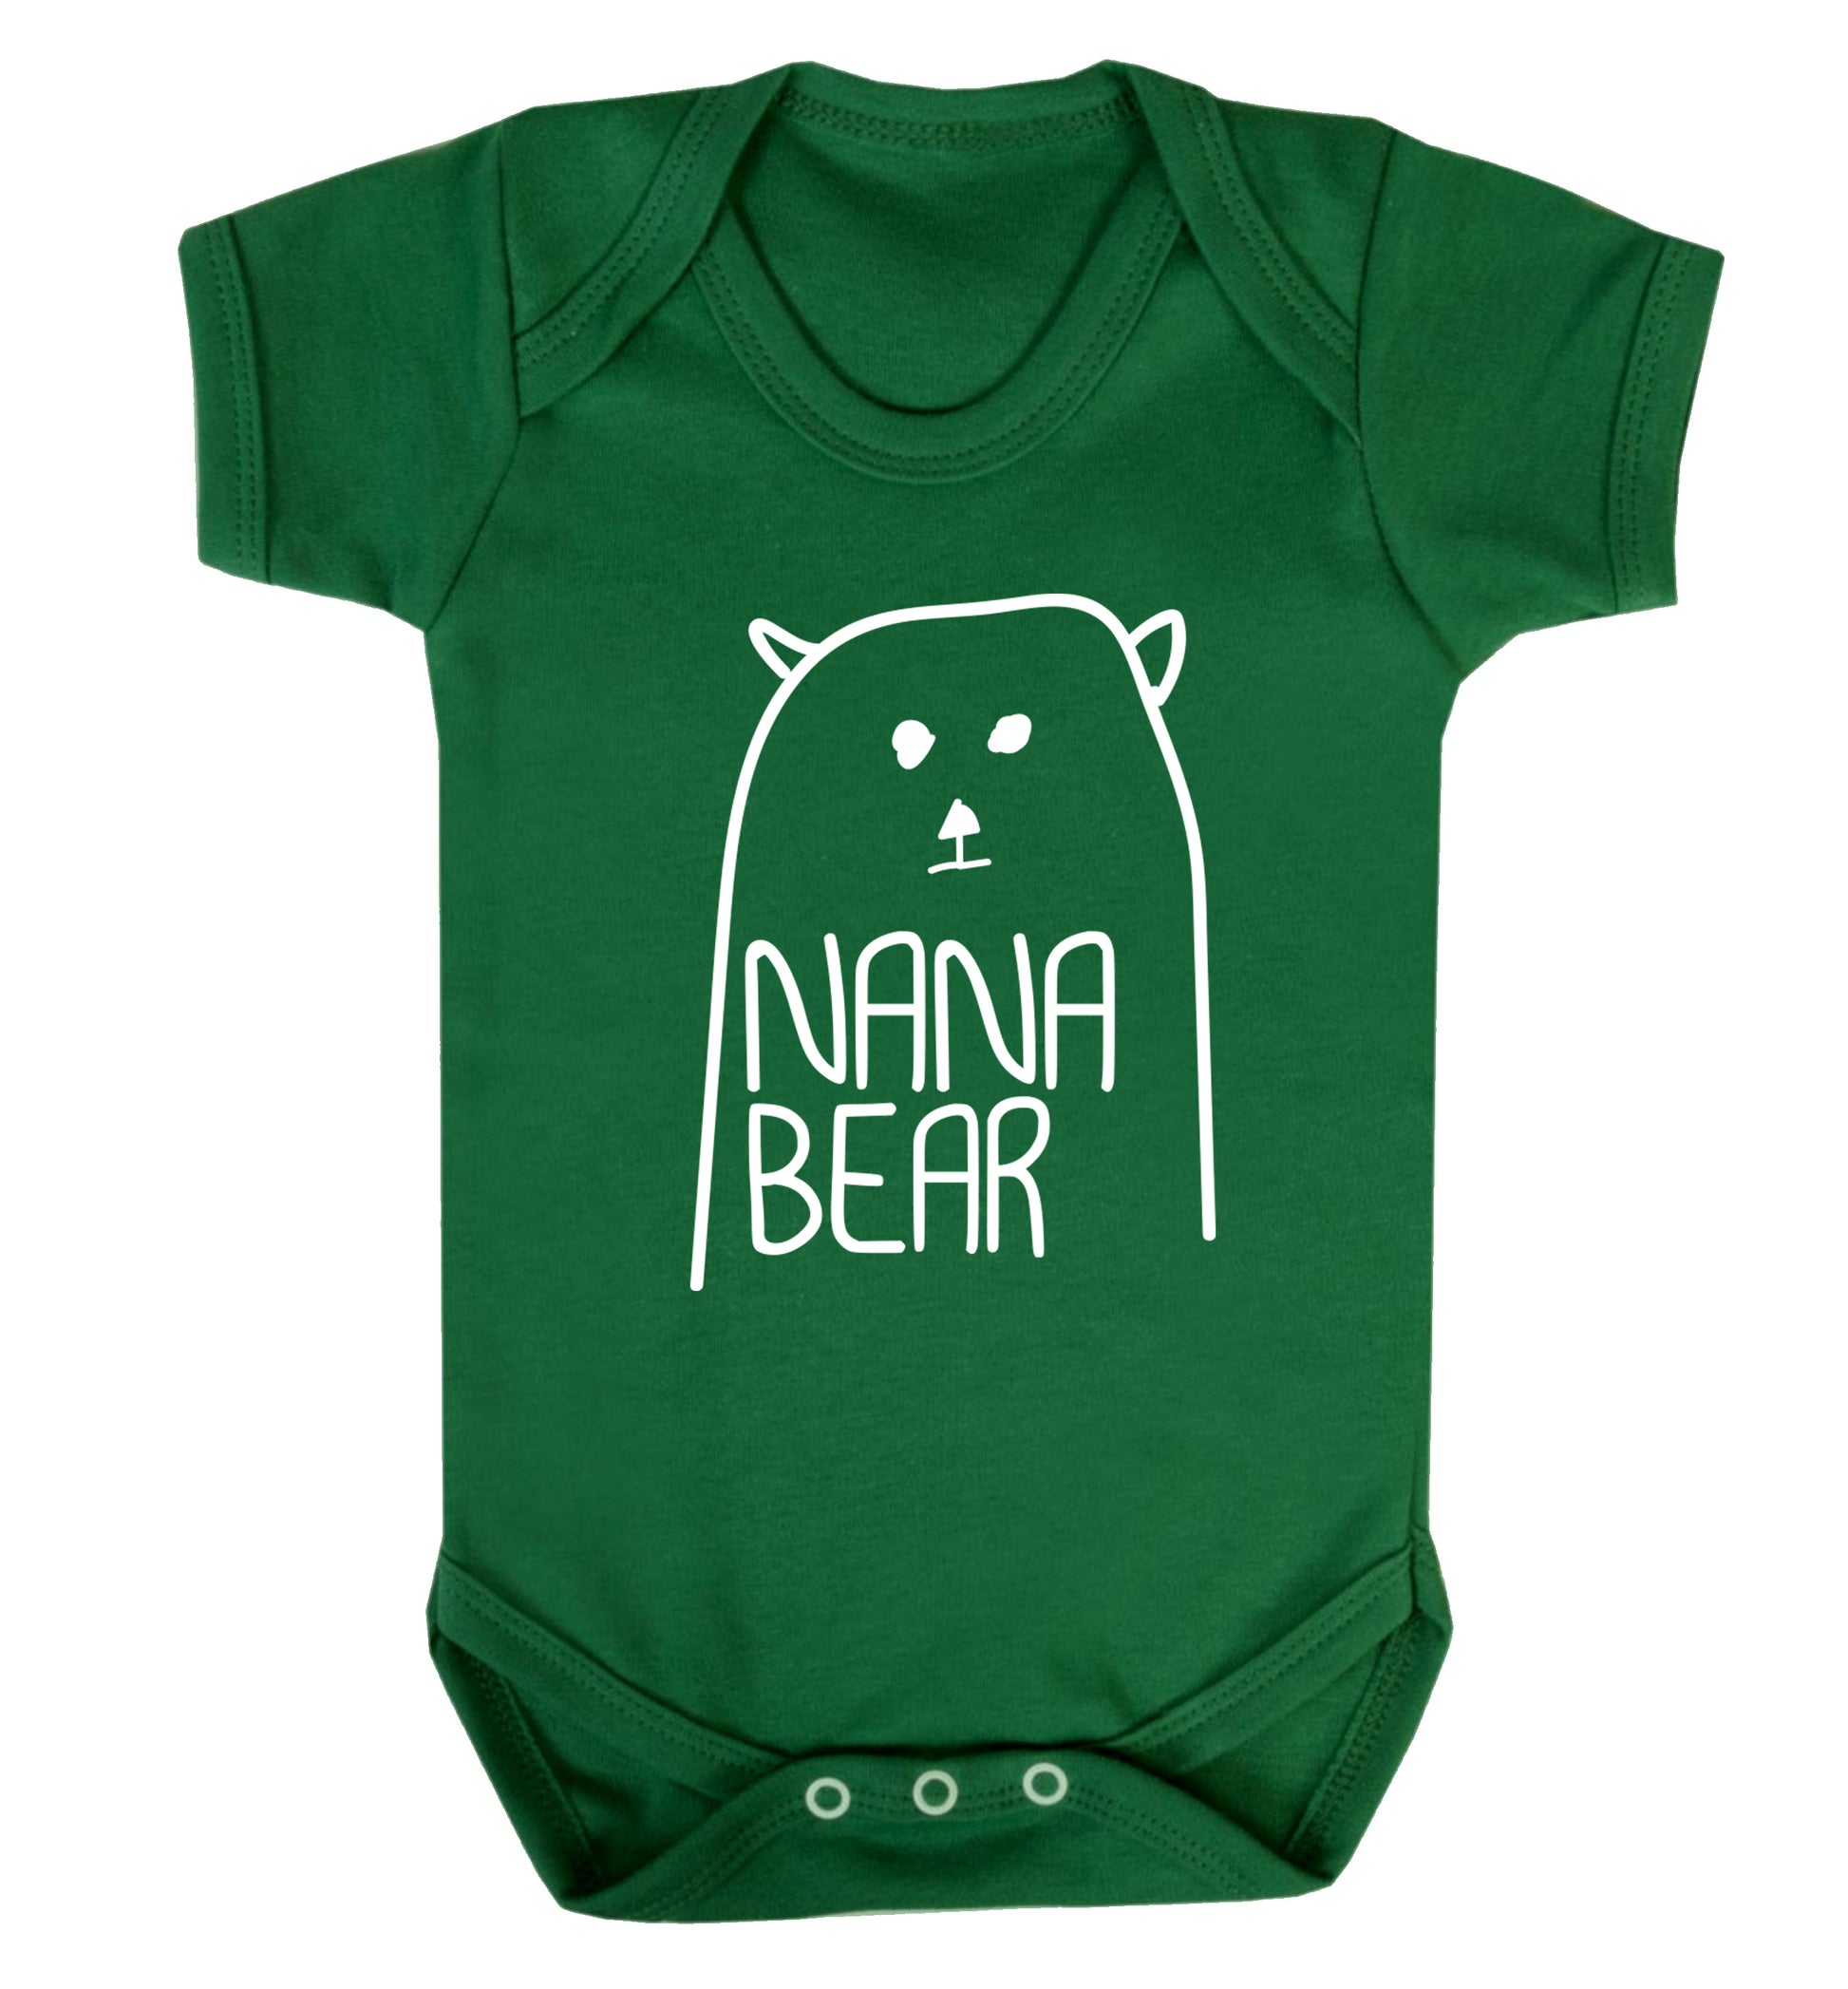 Nana bear Baby Vest green 18-24 months